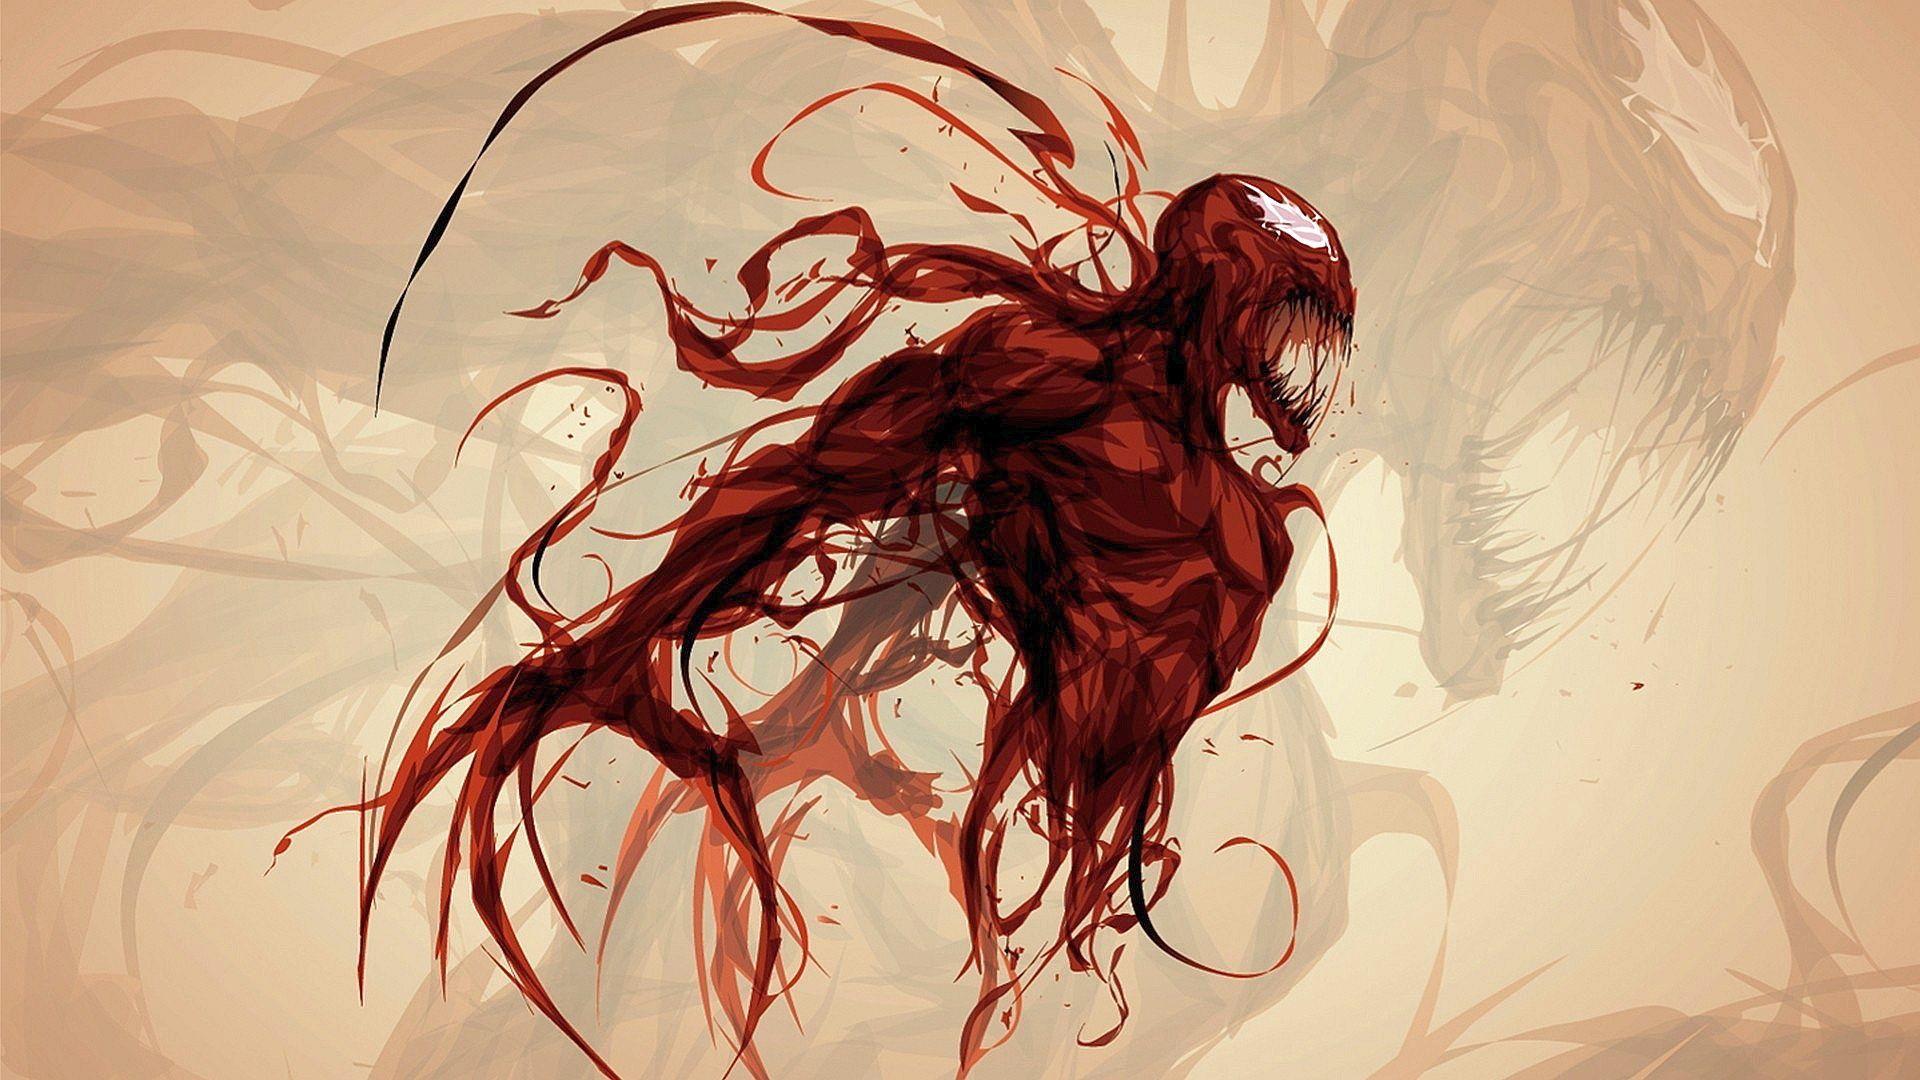 Venom Wallpaper, Best & Inspirational High Quality Venom